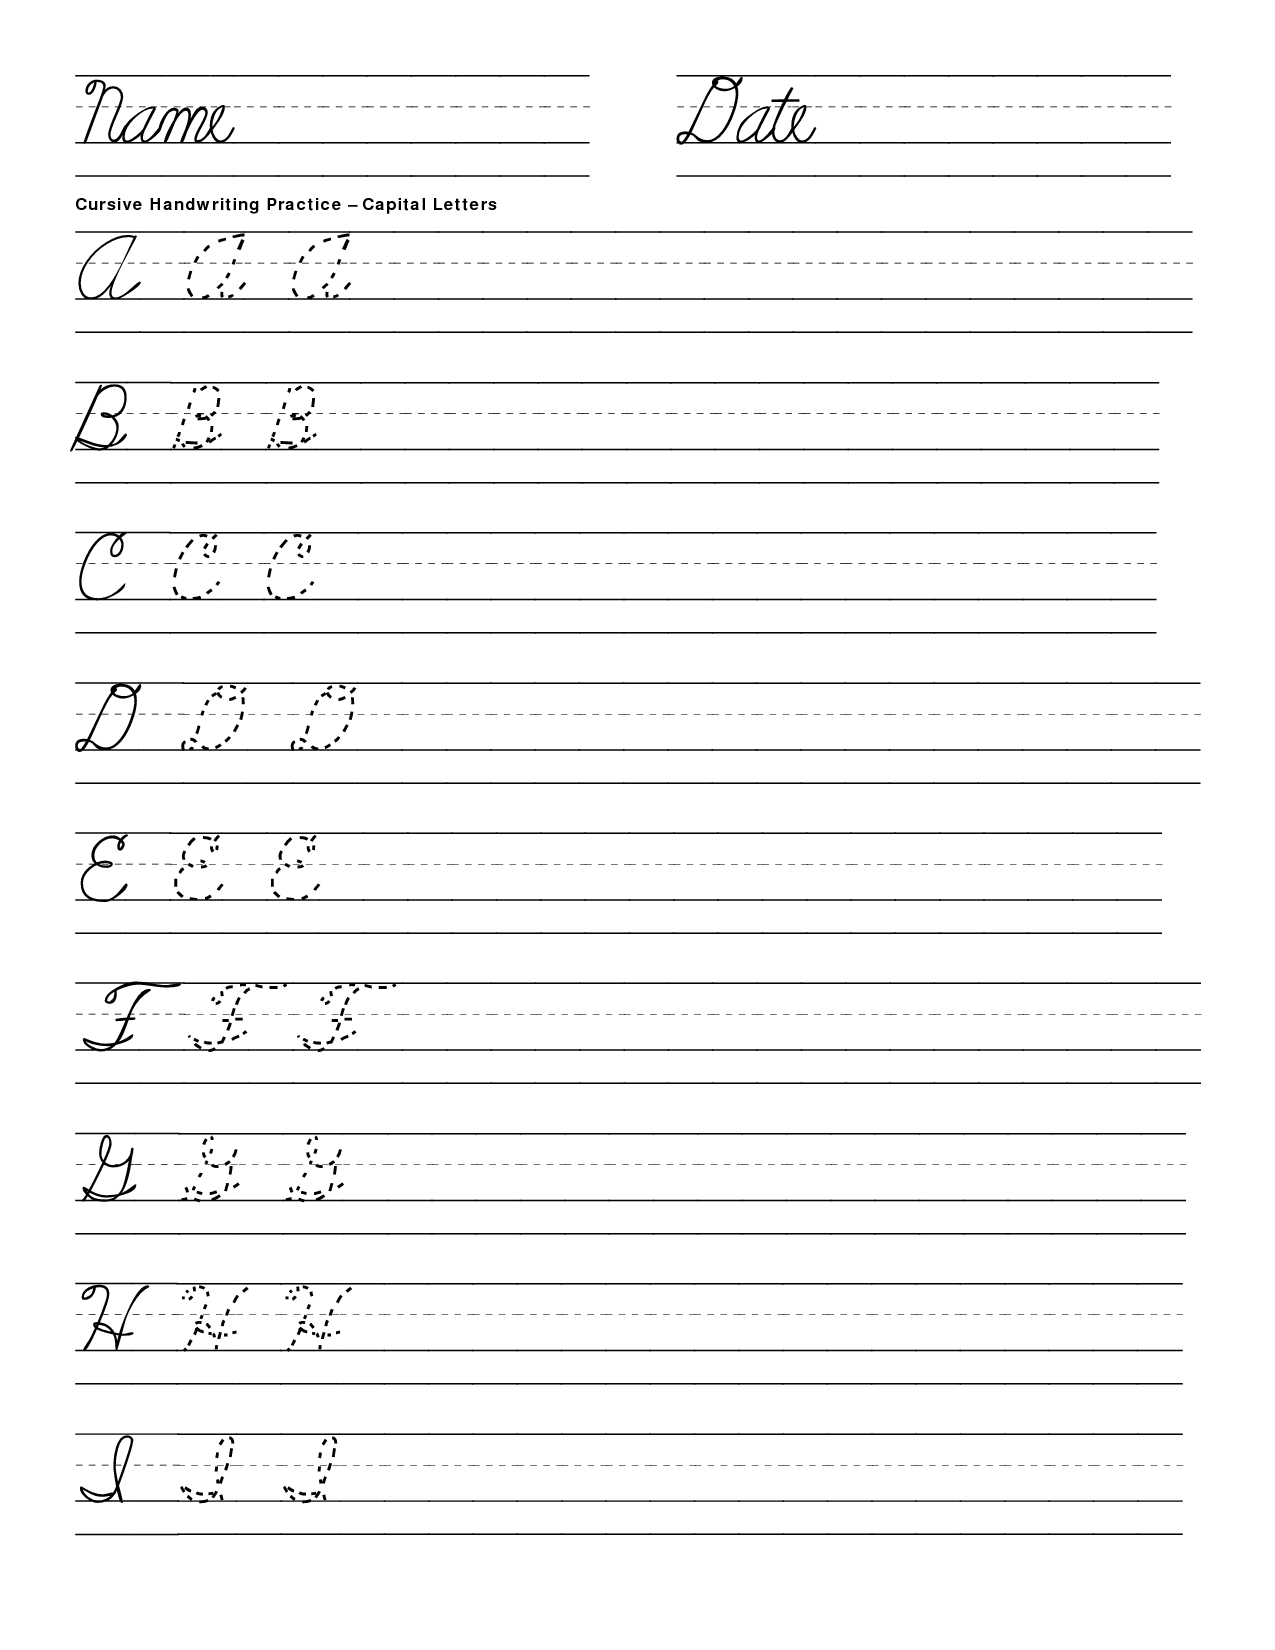 Free Printable Cursive Writing Worksheets For 4Th Grade Printable 